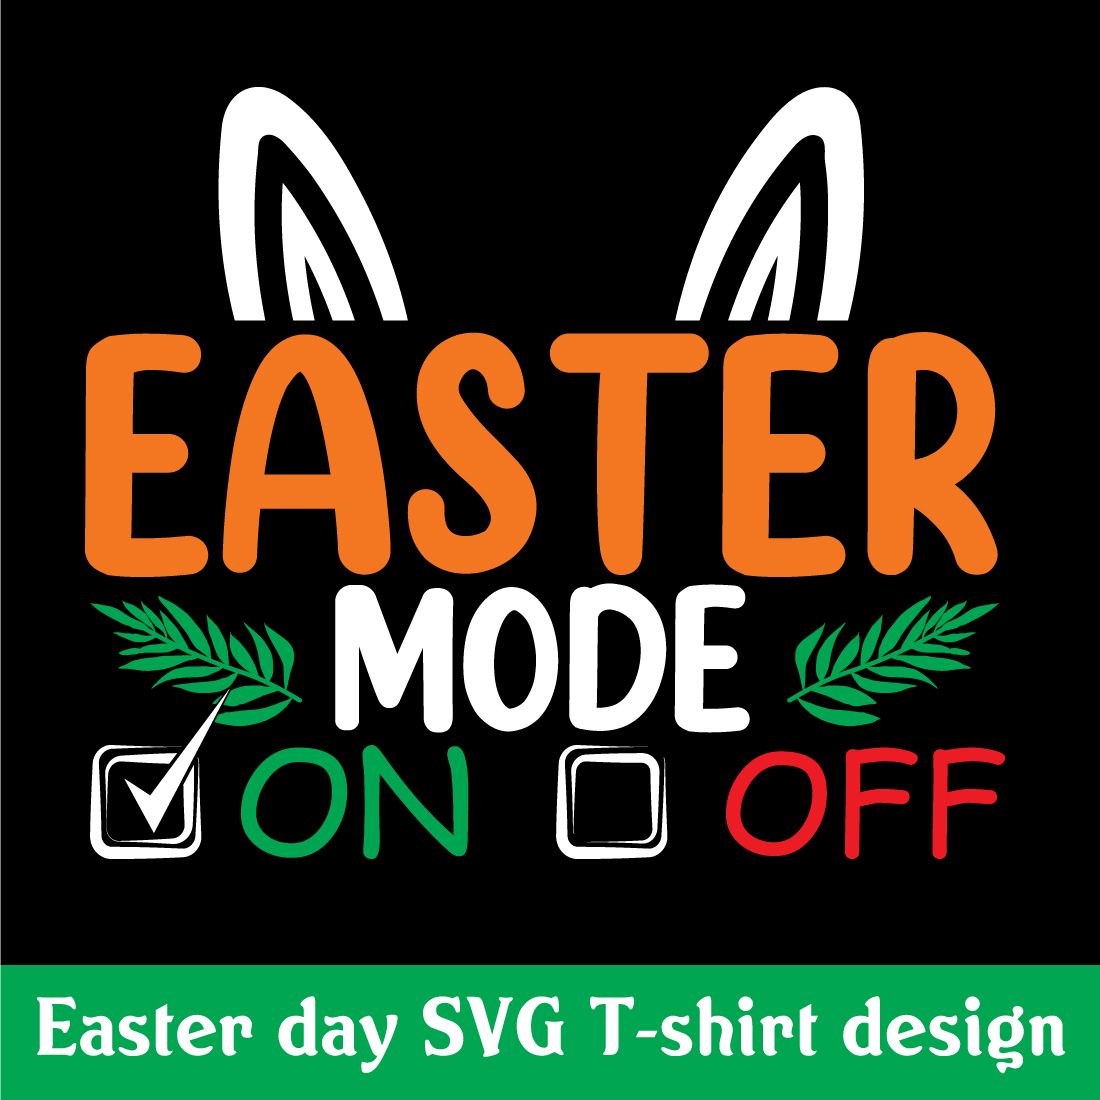 Easter mode on SVG T-shirt design preview image.